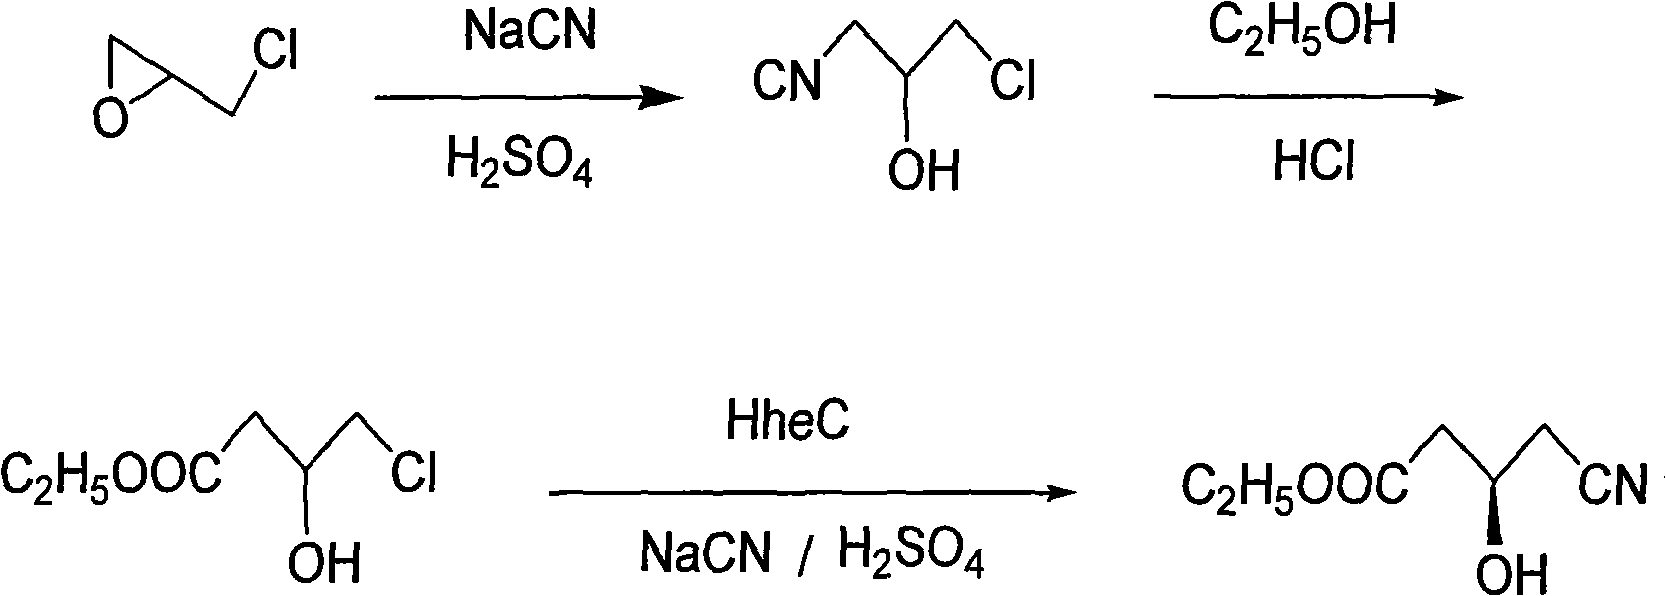 Organism coupling preparation method of R(-)-4-cyan-3-hydroxybutyric acid ethyl ester